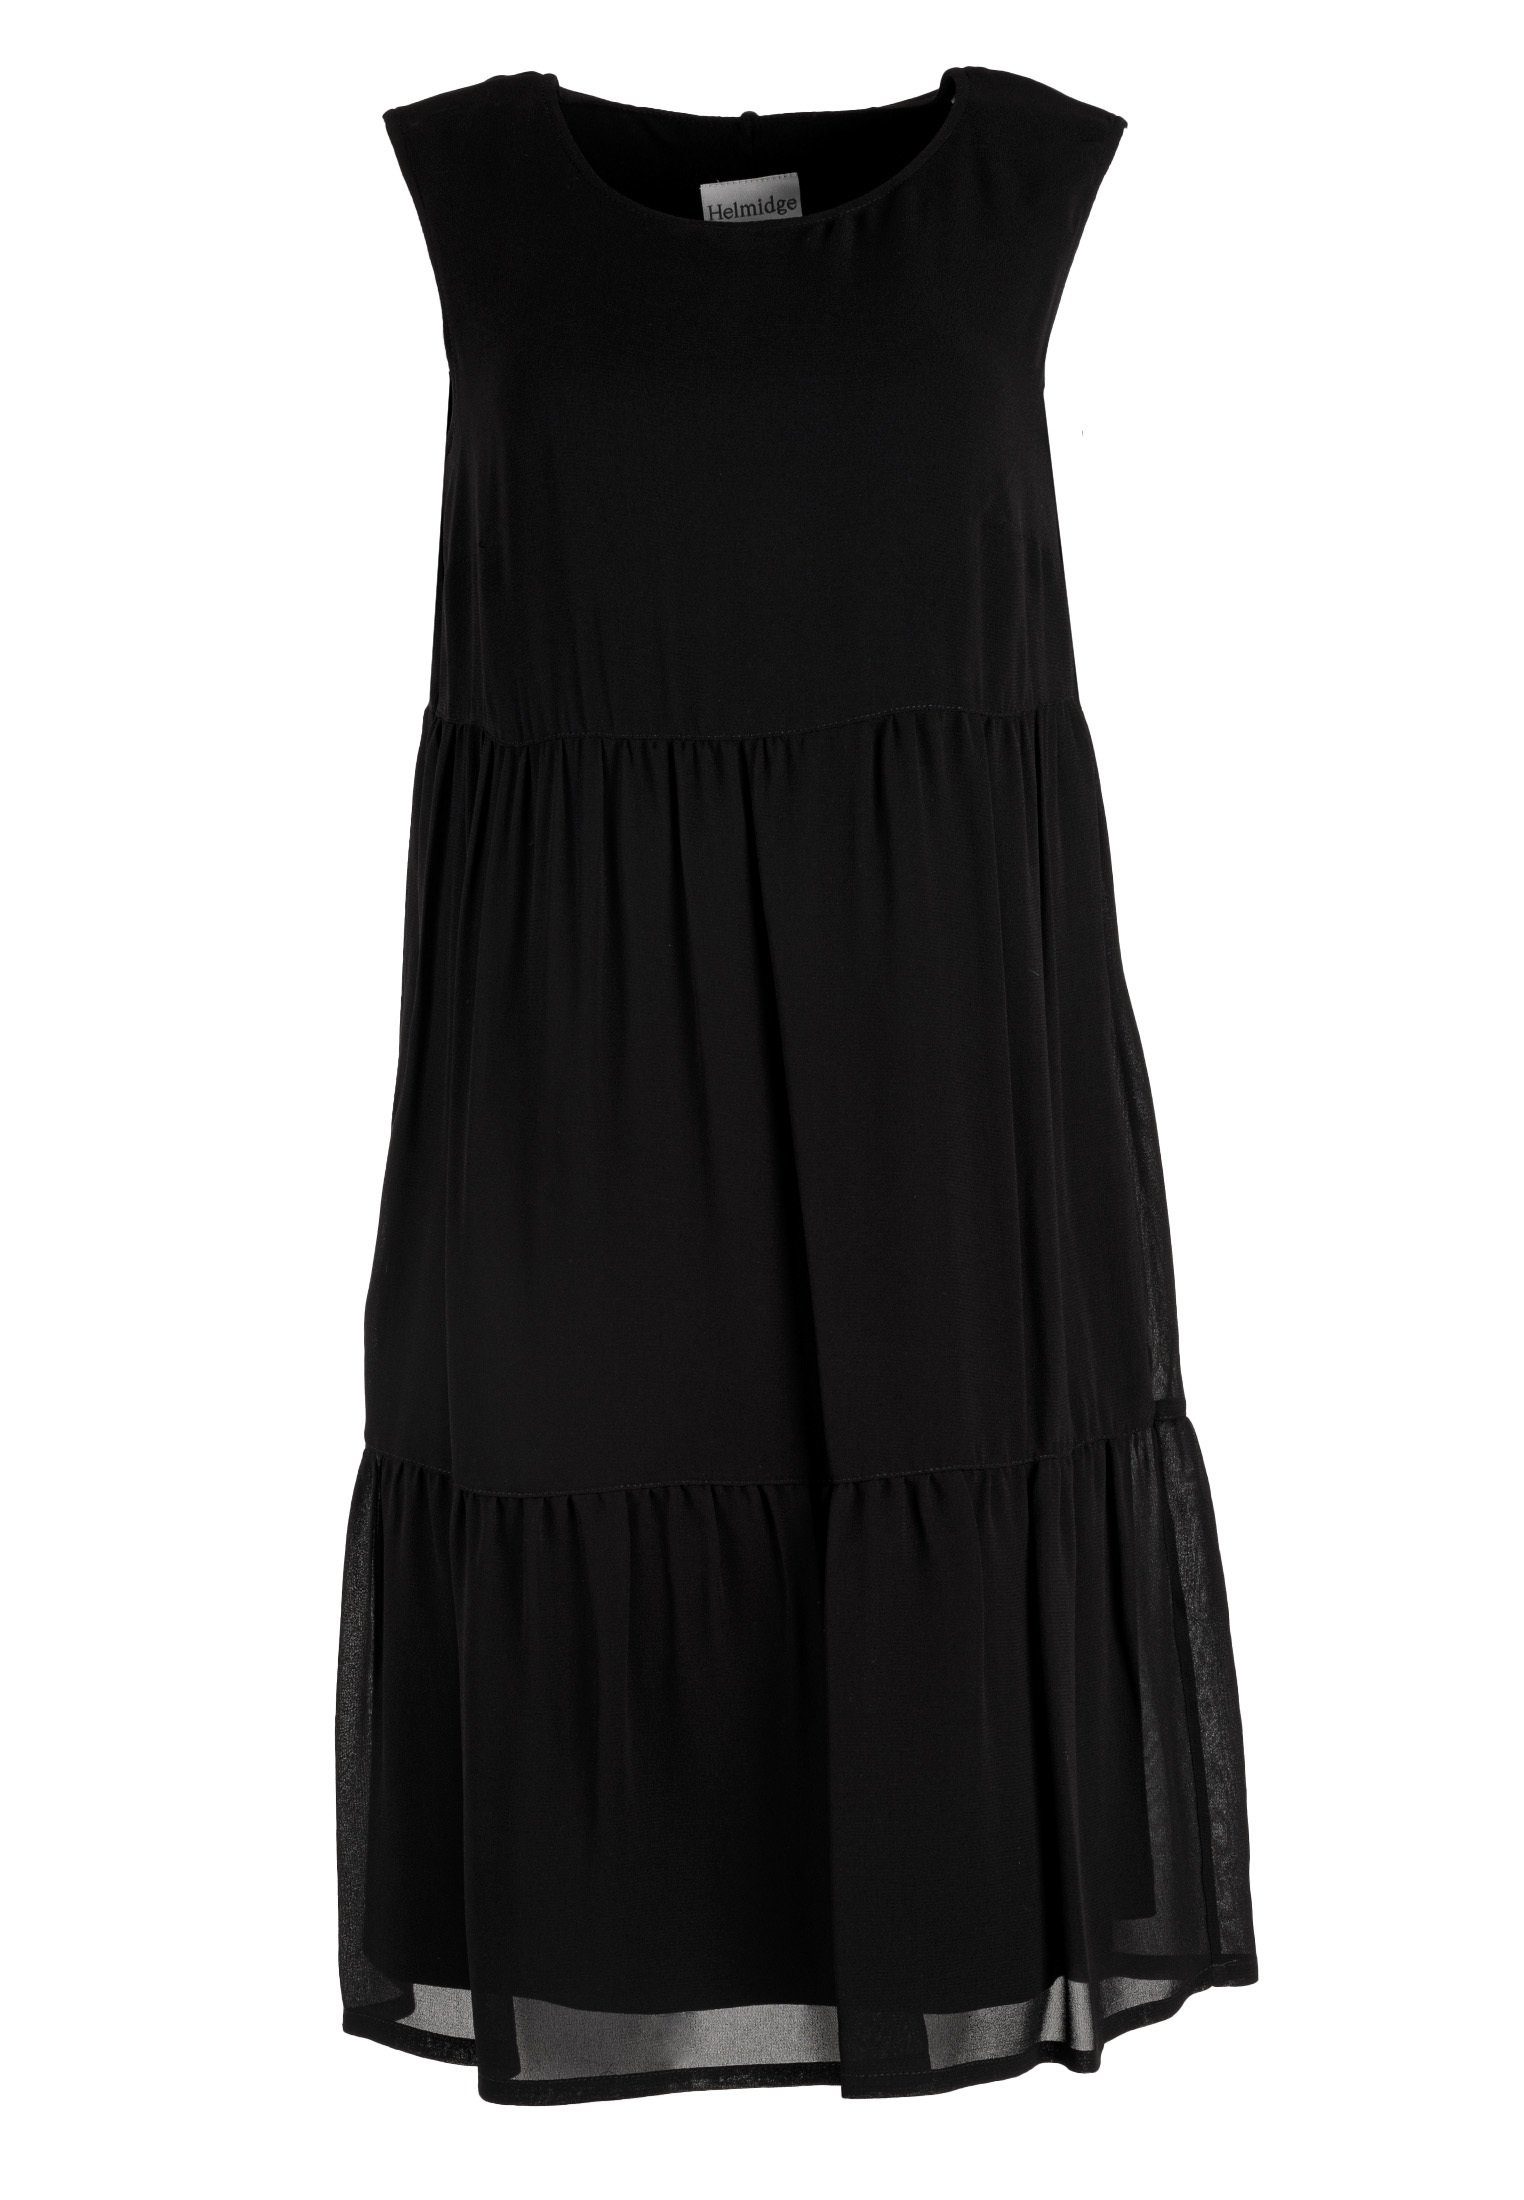 HELMIDGE A-Linien-Kleid schwarz Midikleid